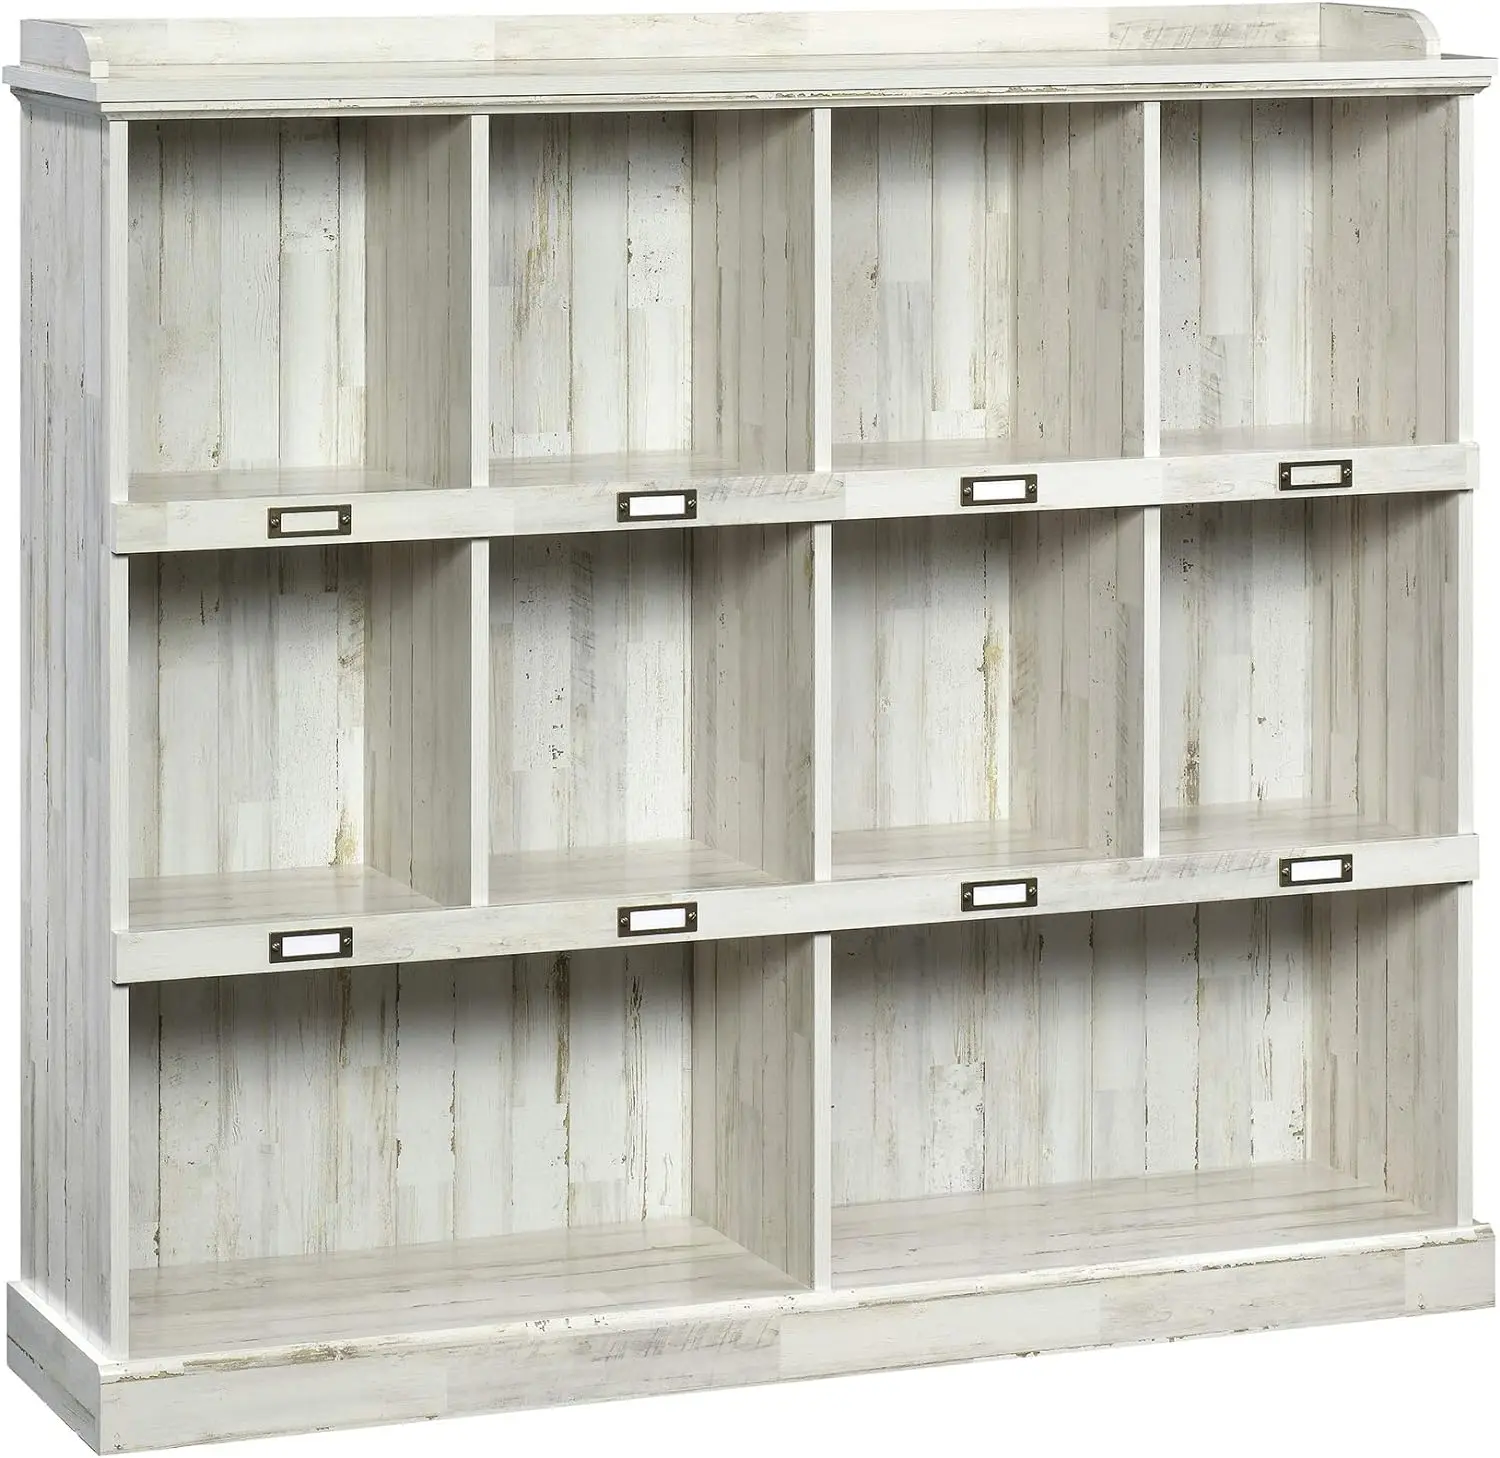 

Sauder Barrister Lane Bookcase, L: 53.15" x W: 12.13" x H: 47.52", White Plank finish